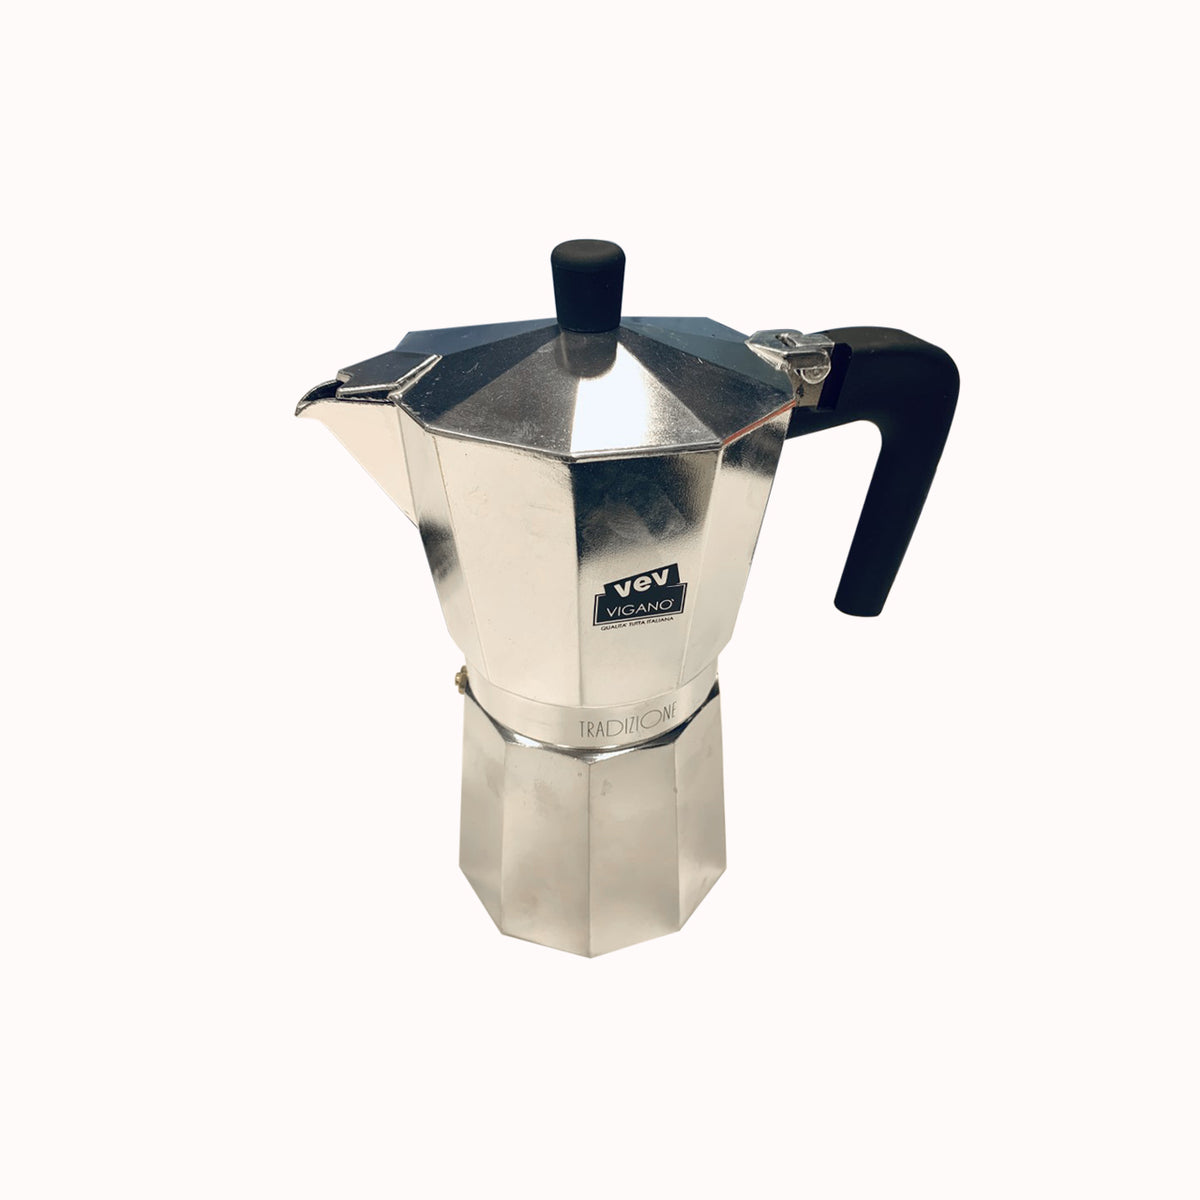 Vev Vigano 6 Cup Espresso Maker - KP600 — Nella Online